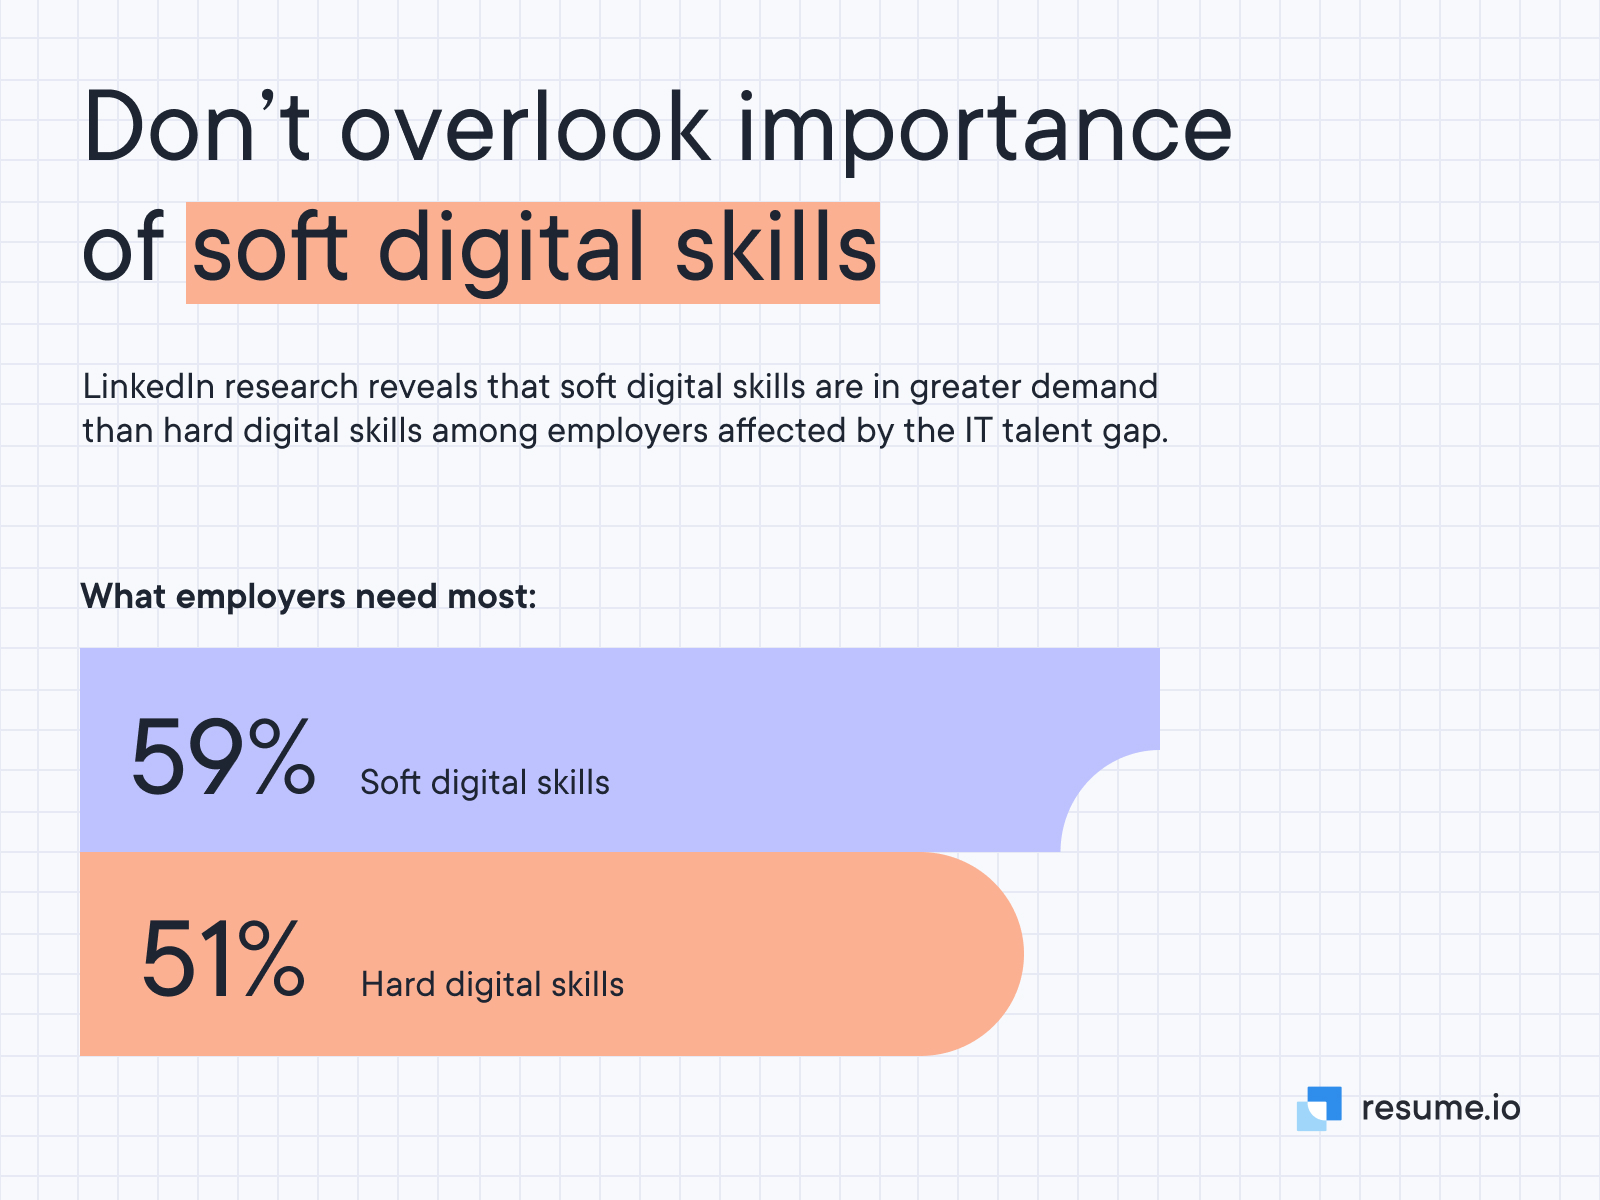 Don't overlook importance of soft digital skills